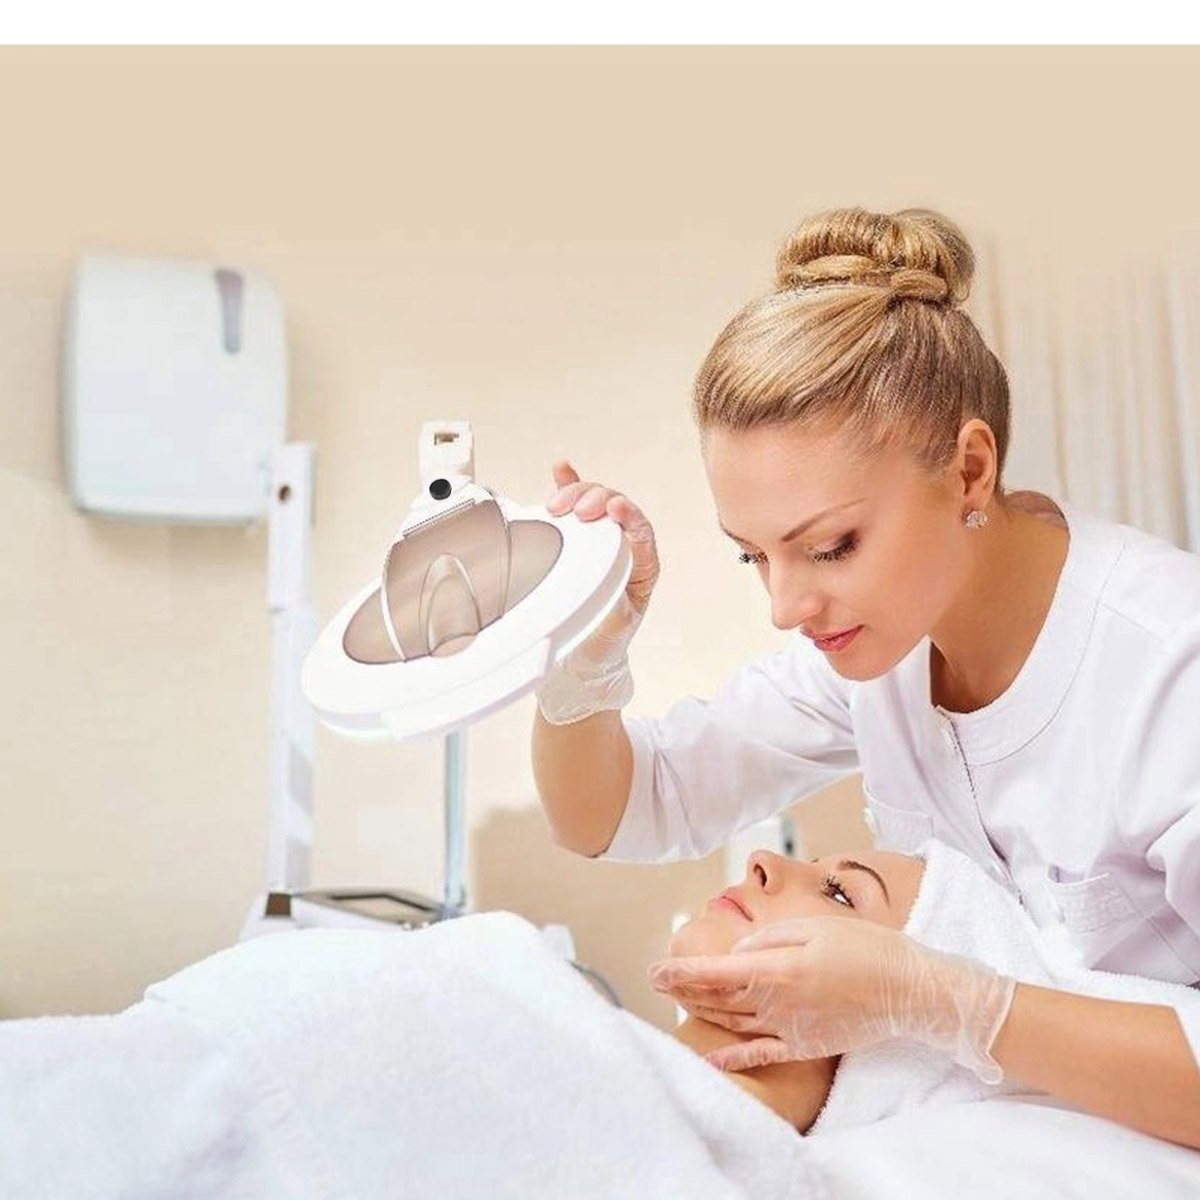 Lupa Luminaria Estetica Dentista Salao Cosmetologia Profissional Led Zoom Limpeza de Pele Flexivel G - 2